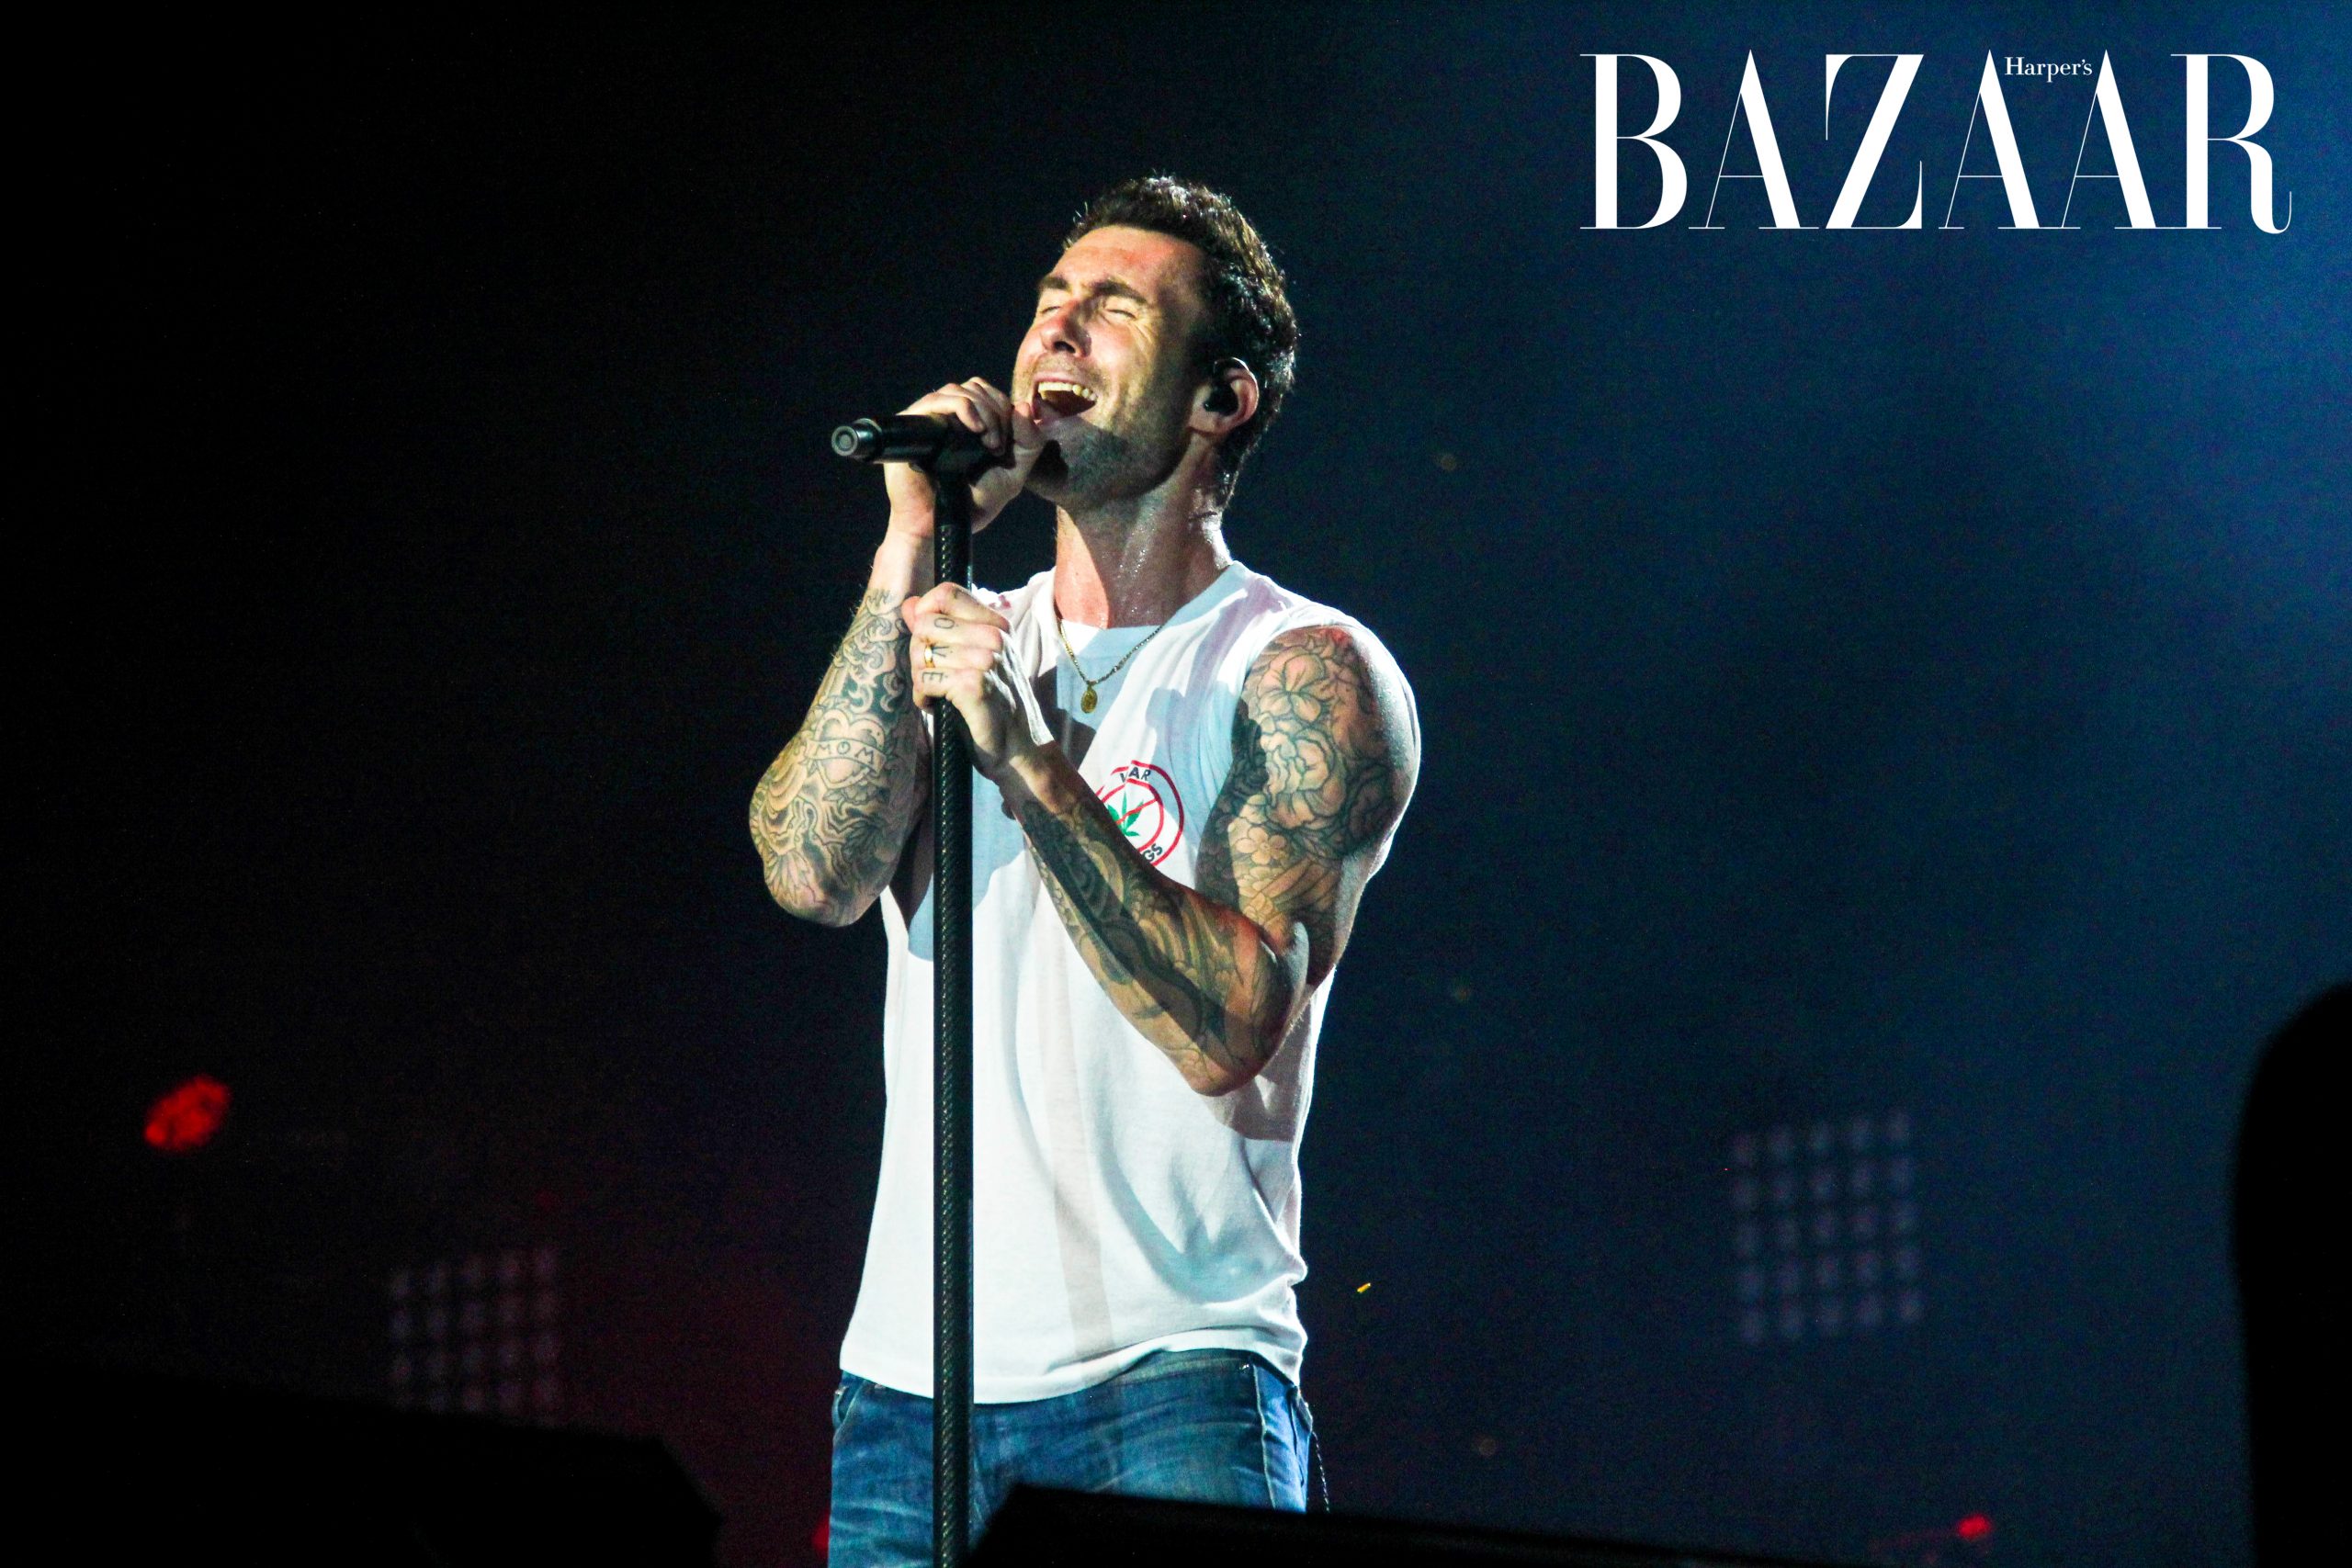 Harpers Bazaar Maroon 5 world tour 2022 01 scaled - Maroon 5 lưu diễn tại châu Á cuối năm 2022